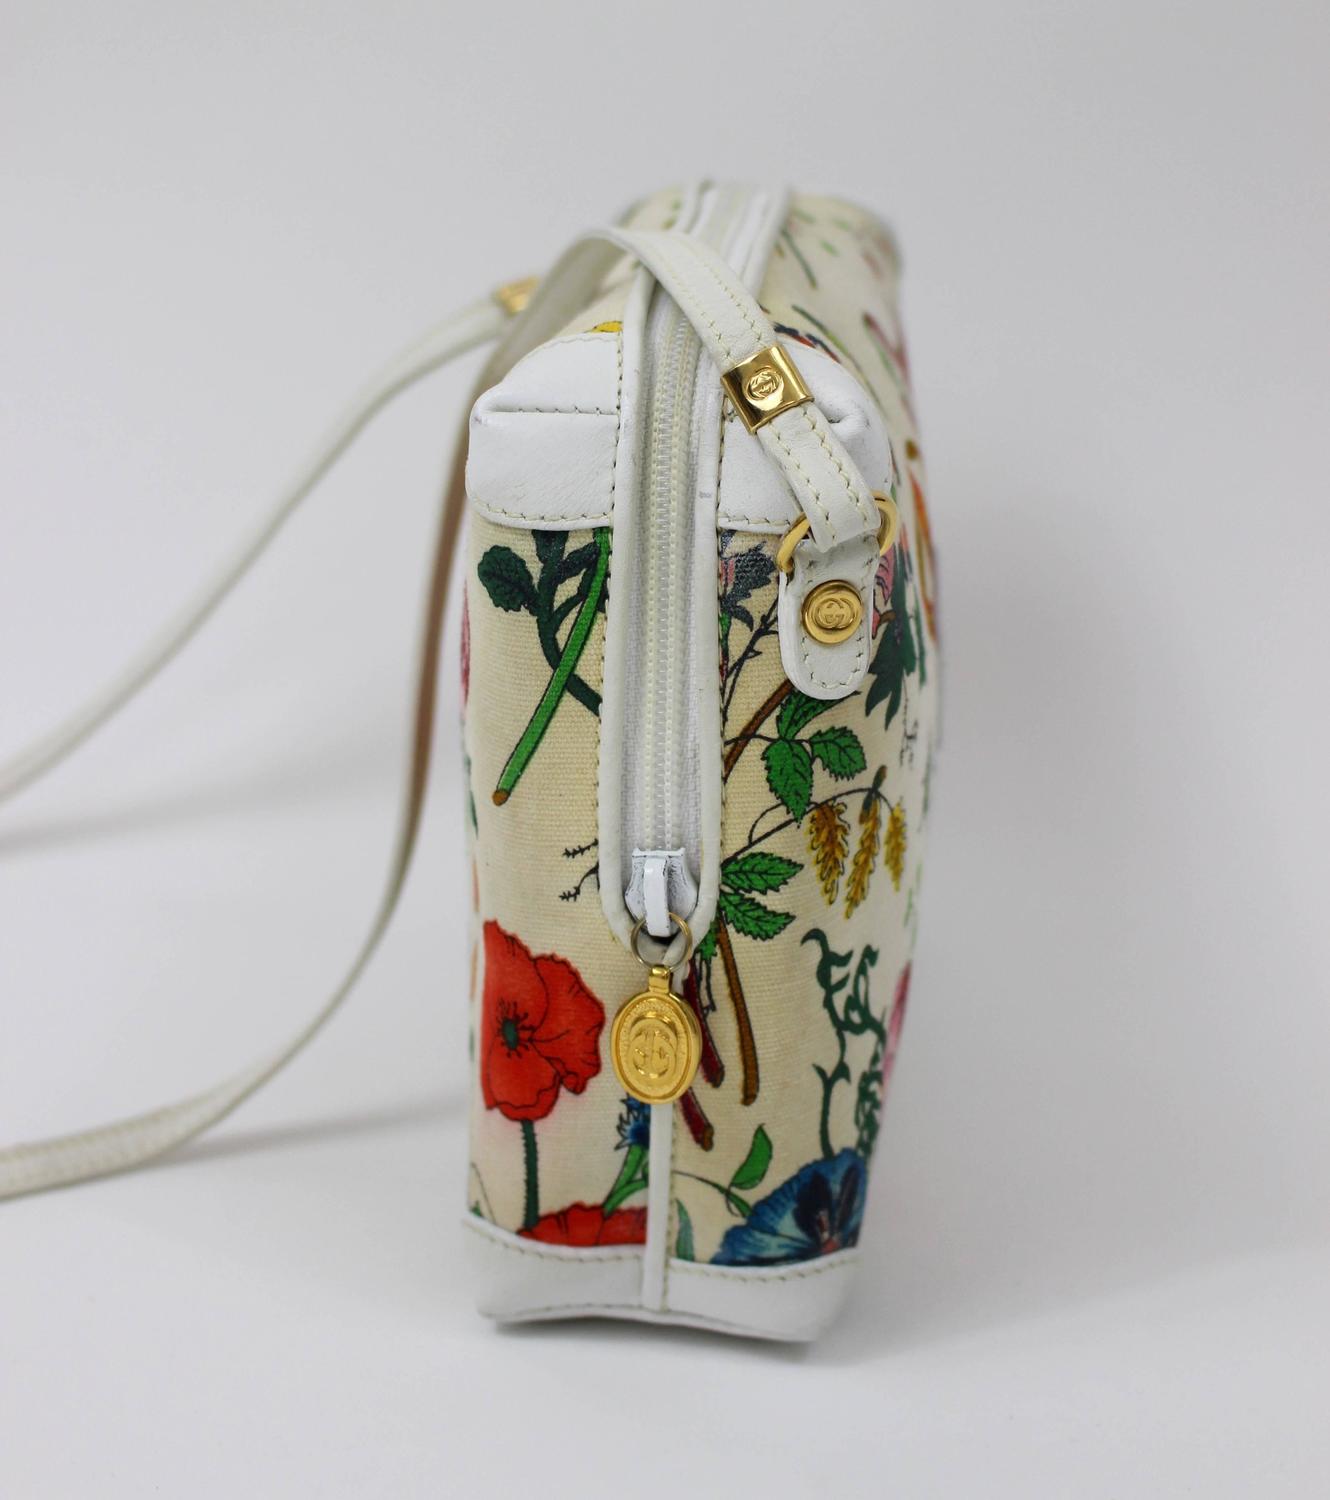 Vintage Gucci Floral Canvas White Leather Cross Body Shoulder Bag Purse For Sale at 1stdibs